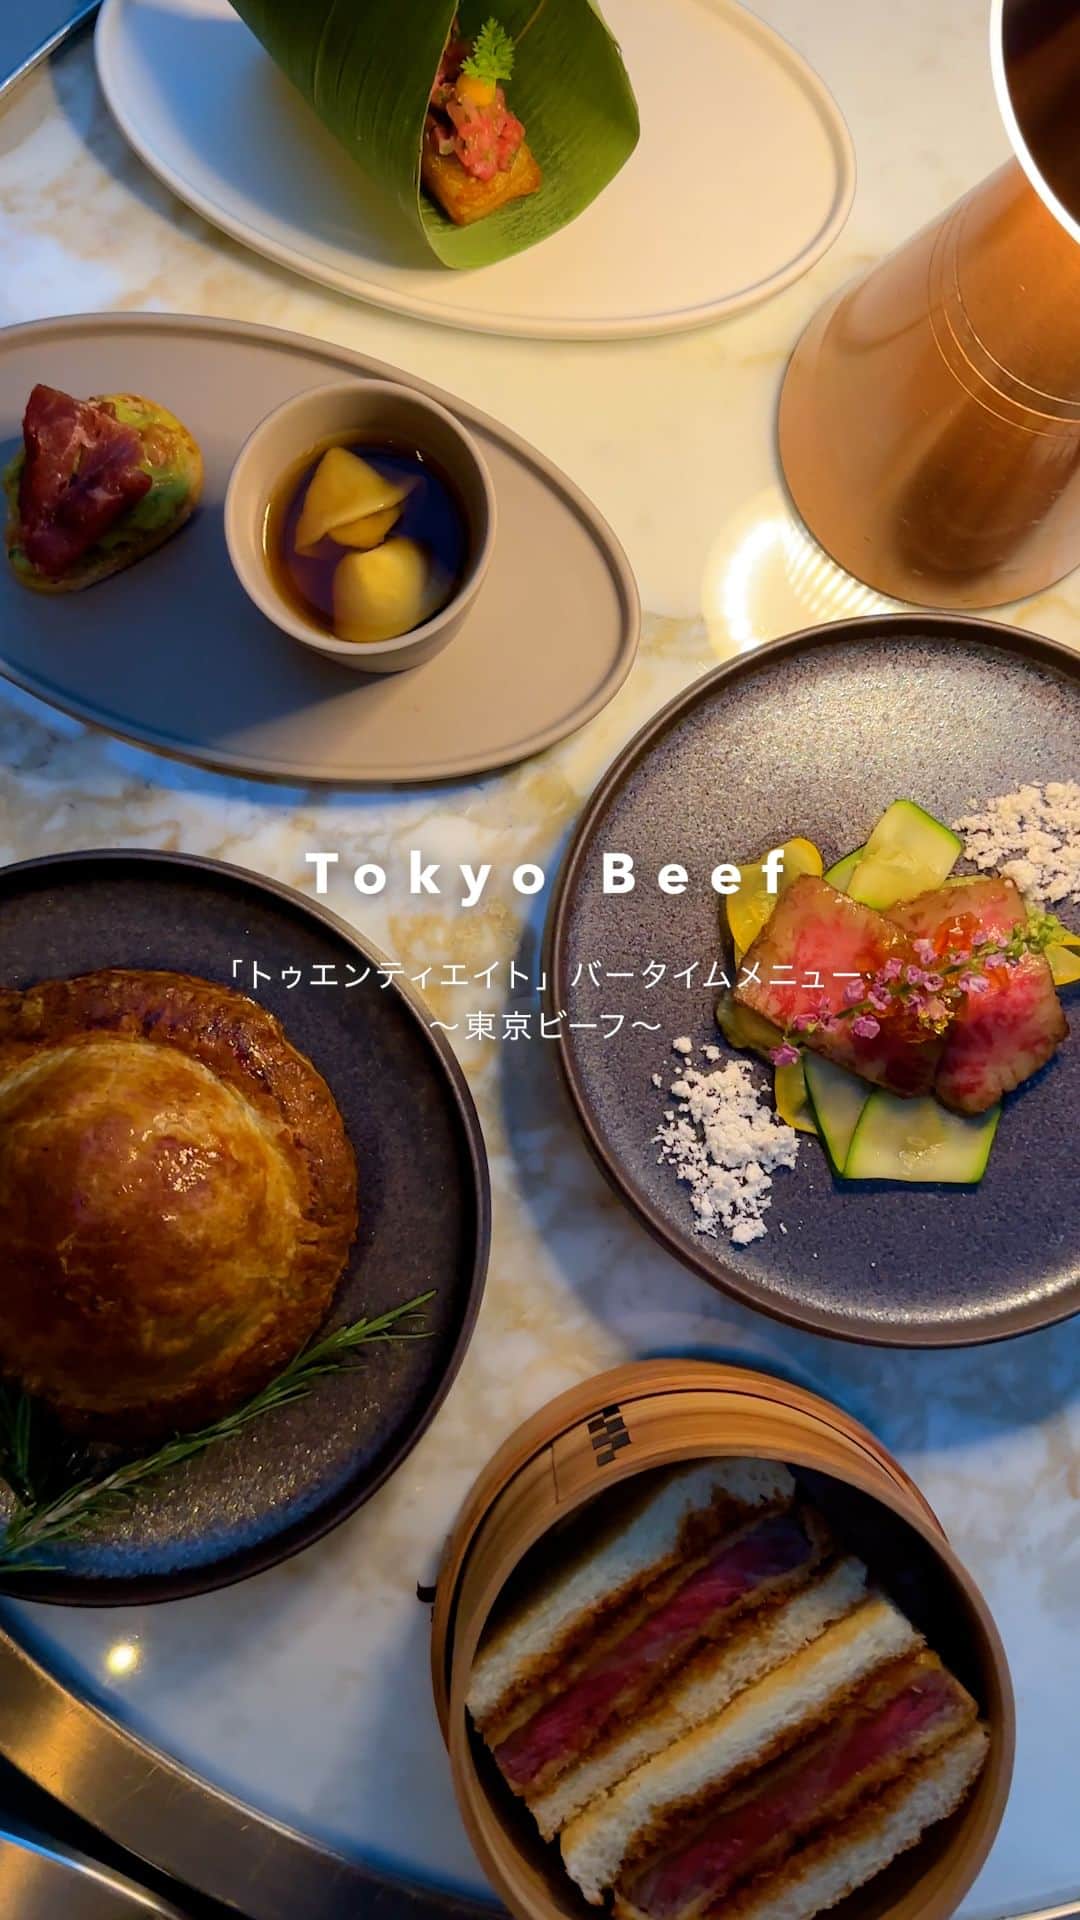 Conrad Tokyoのインスタグラム：「東京ビーフを贅沢に使ったメニューを期間限定でご提供✨  バーテンダーに好みのカクテルをリクエストして希少なの東京ビーフの料理と一緒にご堪能ください。  Limited special menu using luxurious Tokyo Beef✨  Enjoy cocktails tailored to guests' tastes and various exquisite dishes made with rare Tokyo Beef.  #コンラッド東京 #コンラッド #東京ホテル #ホテル #ラグジュアリーホテル #ホテル #ホテルライク #ホテルステイ #ホカンス #おすすめホテル #ディナー #カクテル #夜景 #ホテルディナー #デート #デートディナー #肉 #肉料理 #黒毛和牛 #カツサンド  #conradtokyo #conrad #hotel #tokyohotel #luxuryhotel #tokyorestaurant #tokyotrip #tokyofood #beef」